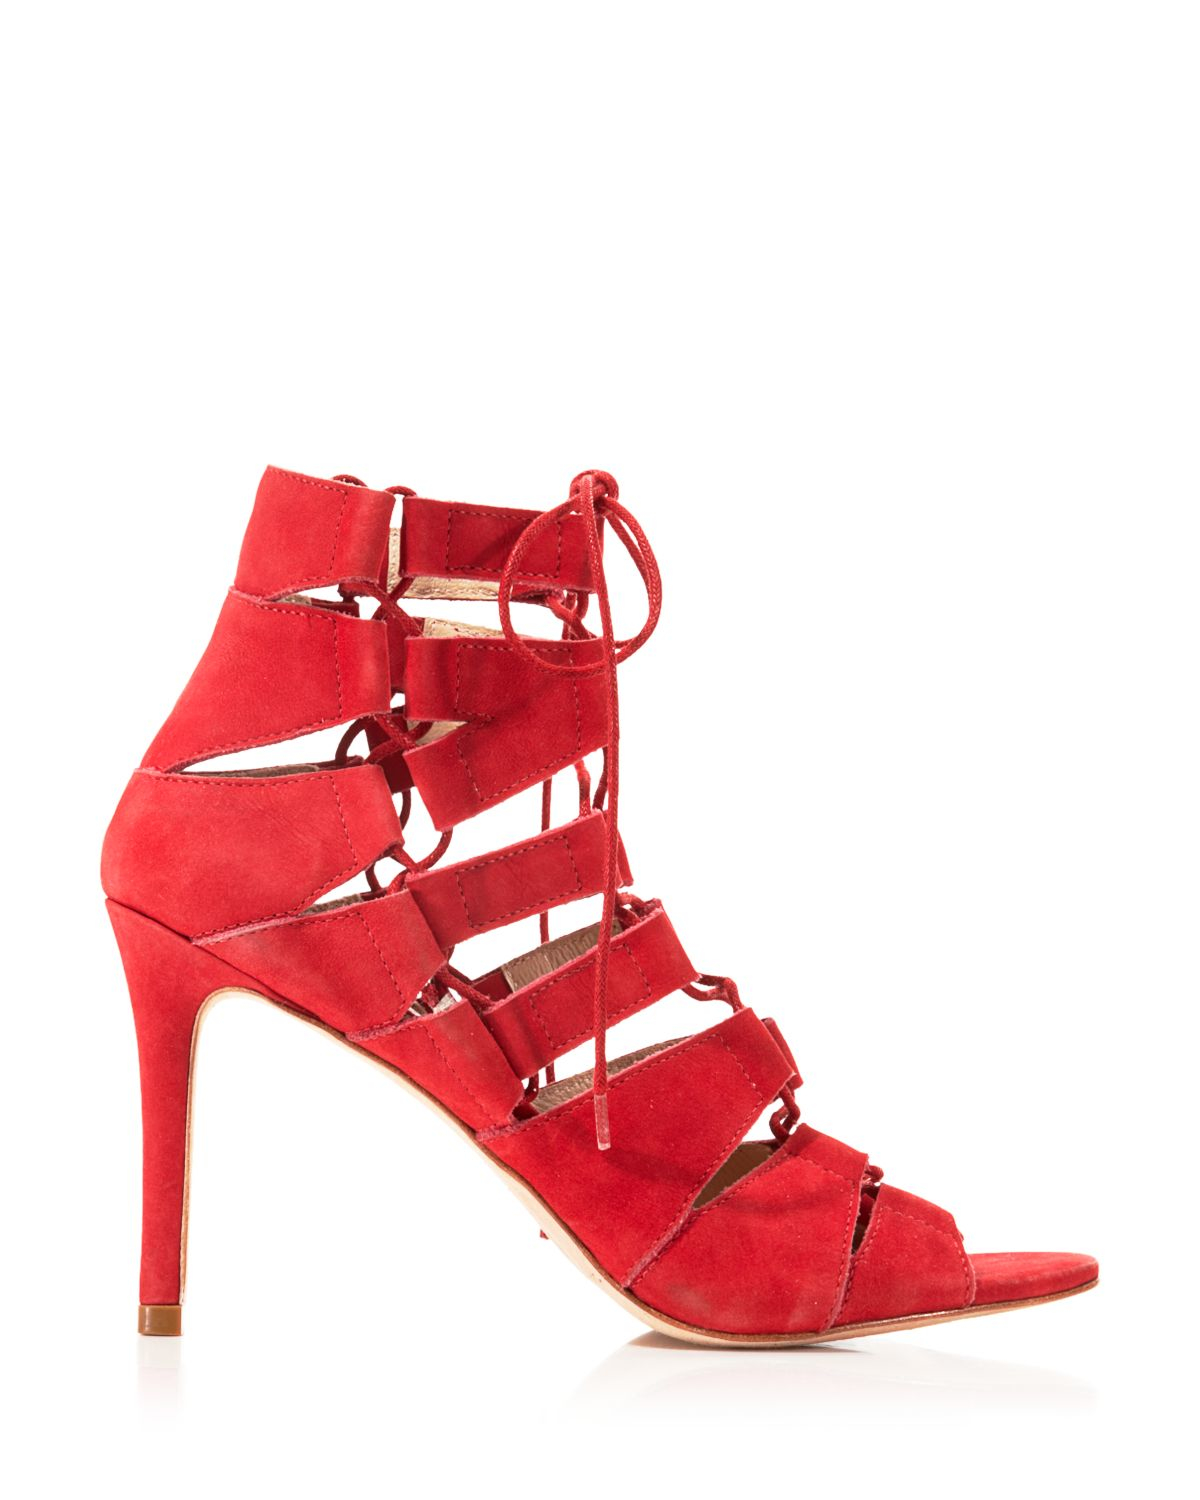 Loeffler Randall Lottie Lace Up High Heel Sandals in Red | Lyst